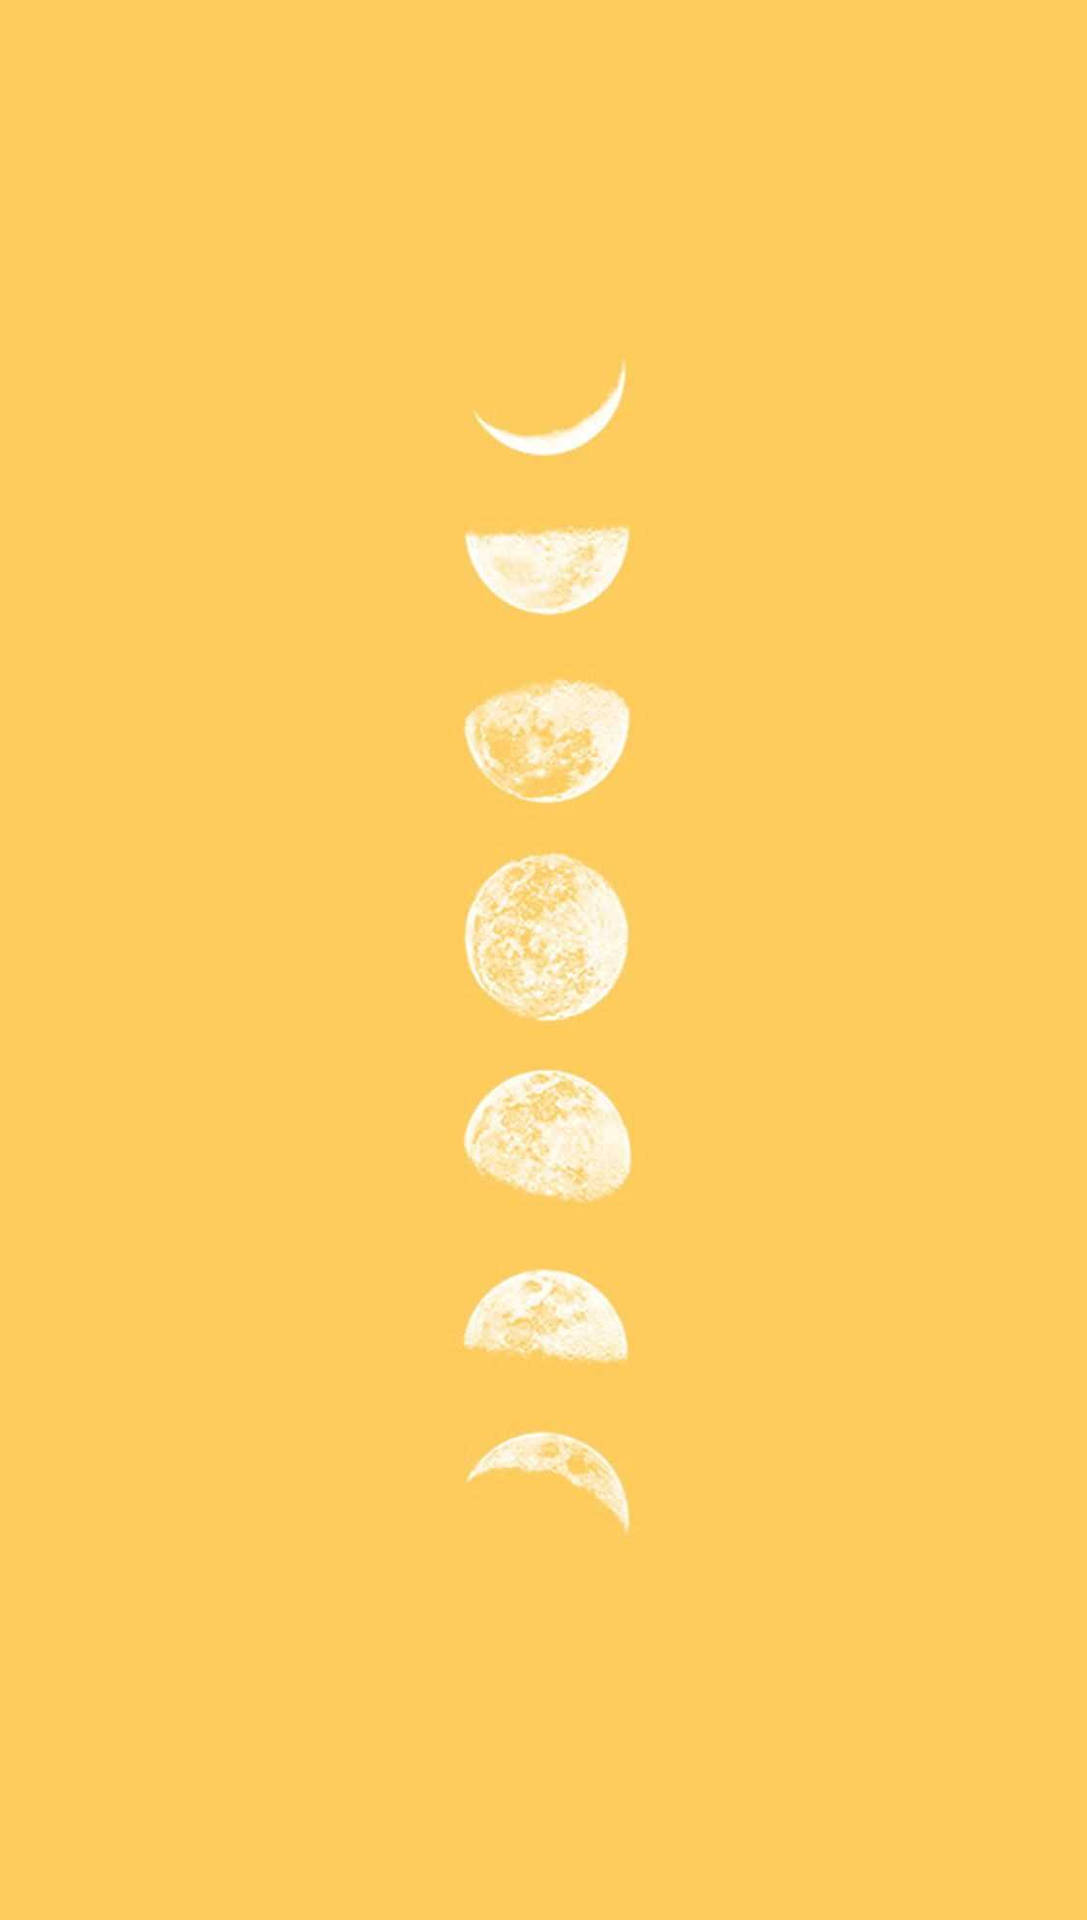 Moon Phase Pastel Yellow Aesthetic Background